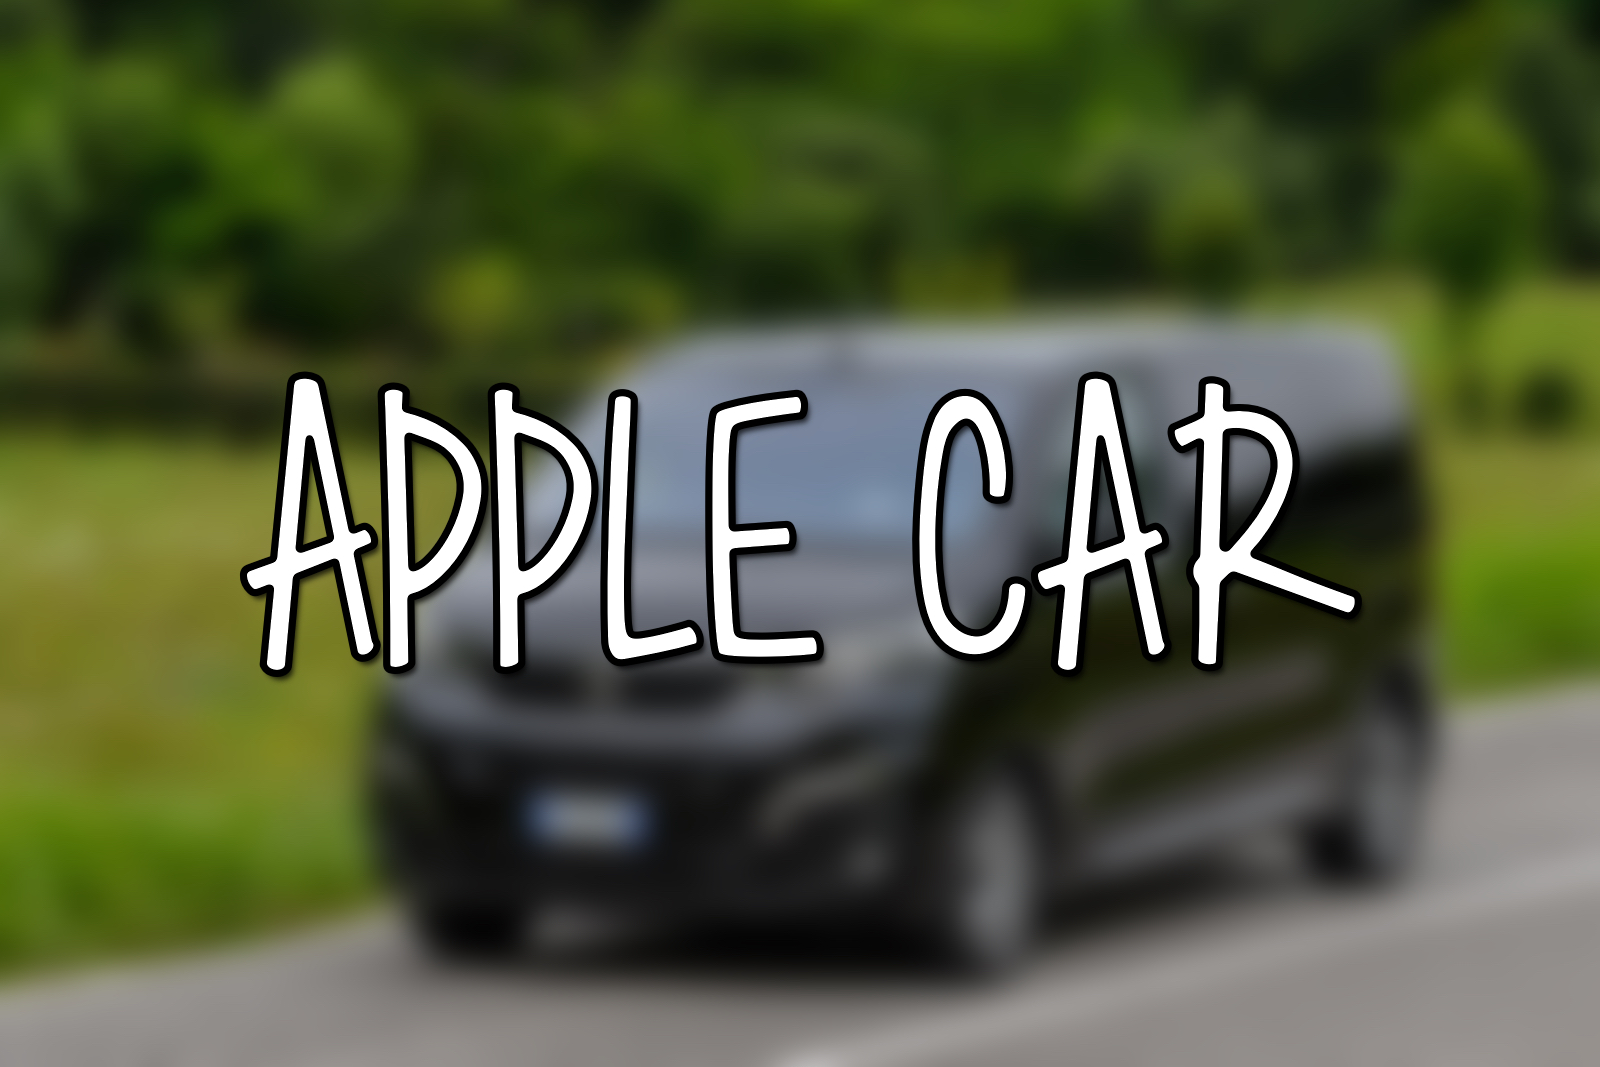 Apple Car, Van, Elettrico, Project Titan